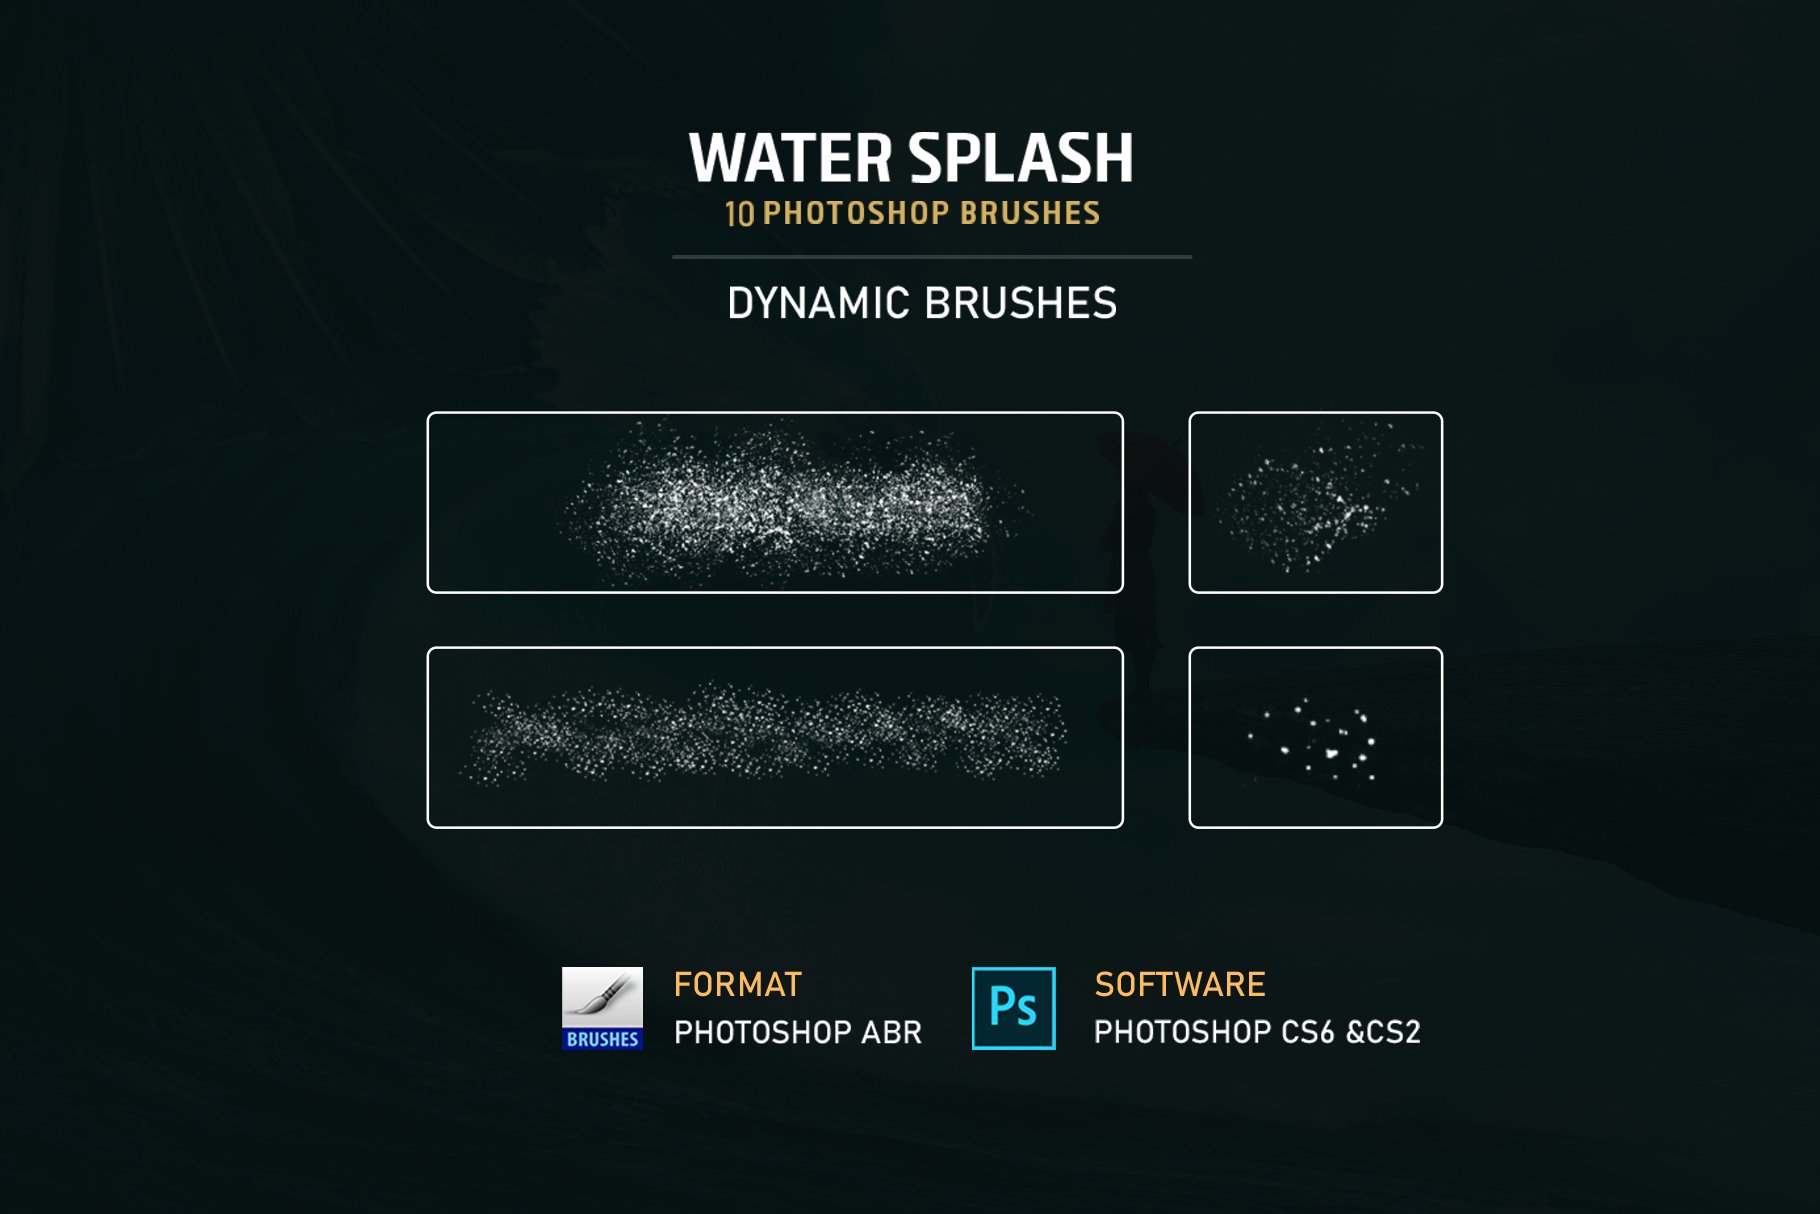 10 Water Splash Brushespreview image.